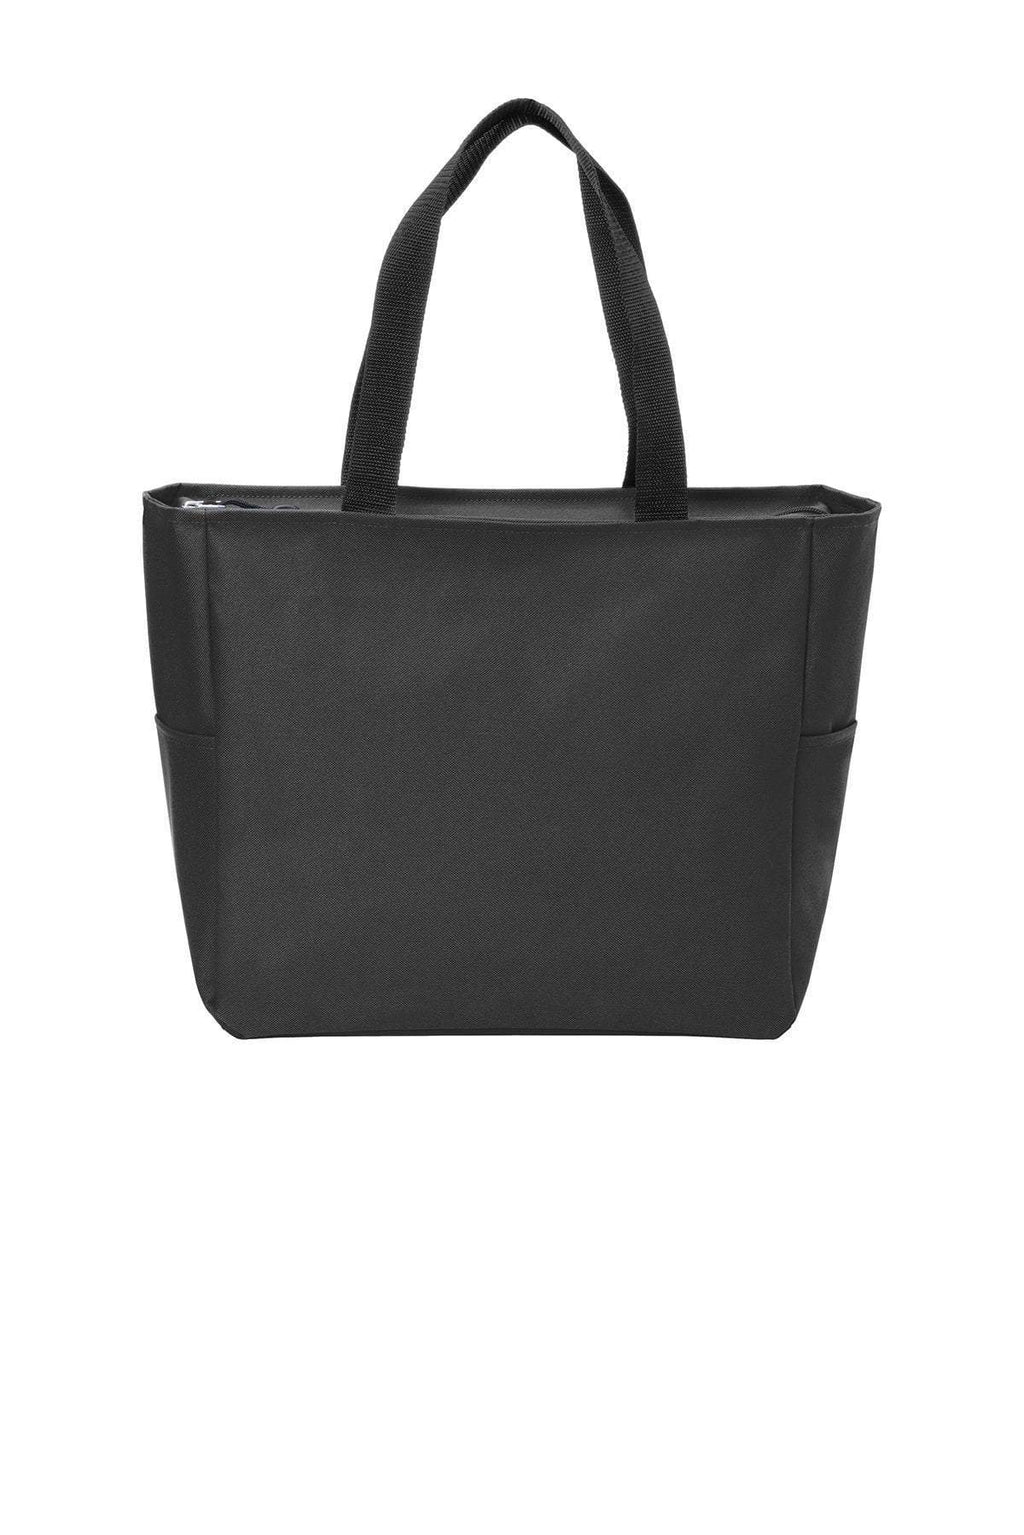 BAGANDTOTE CANVAS TOTE BAG BLACK Essential Zip Polyester Canvas Tote Bag